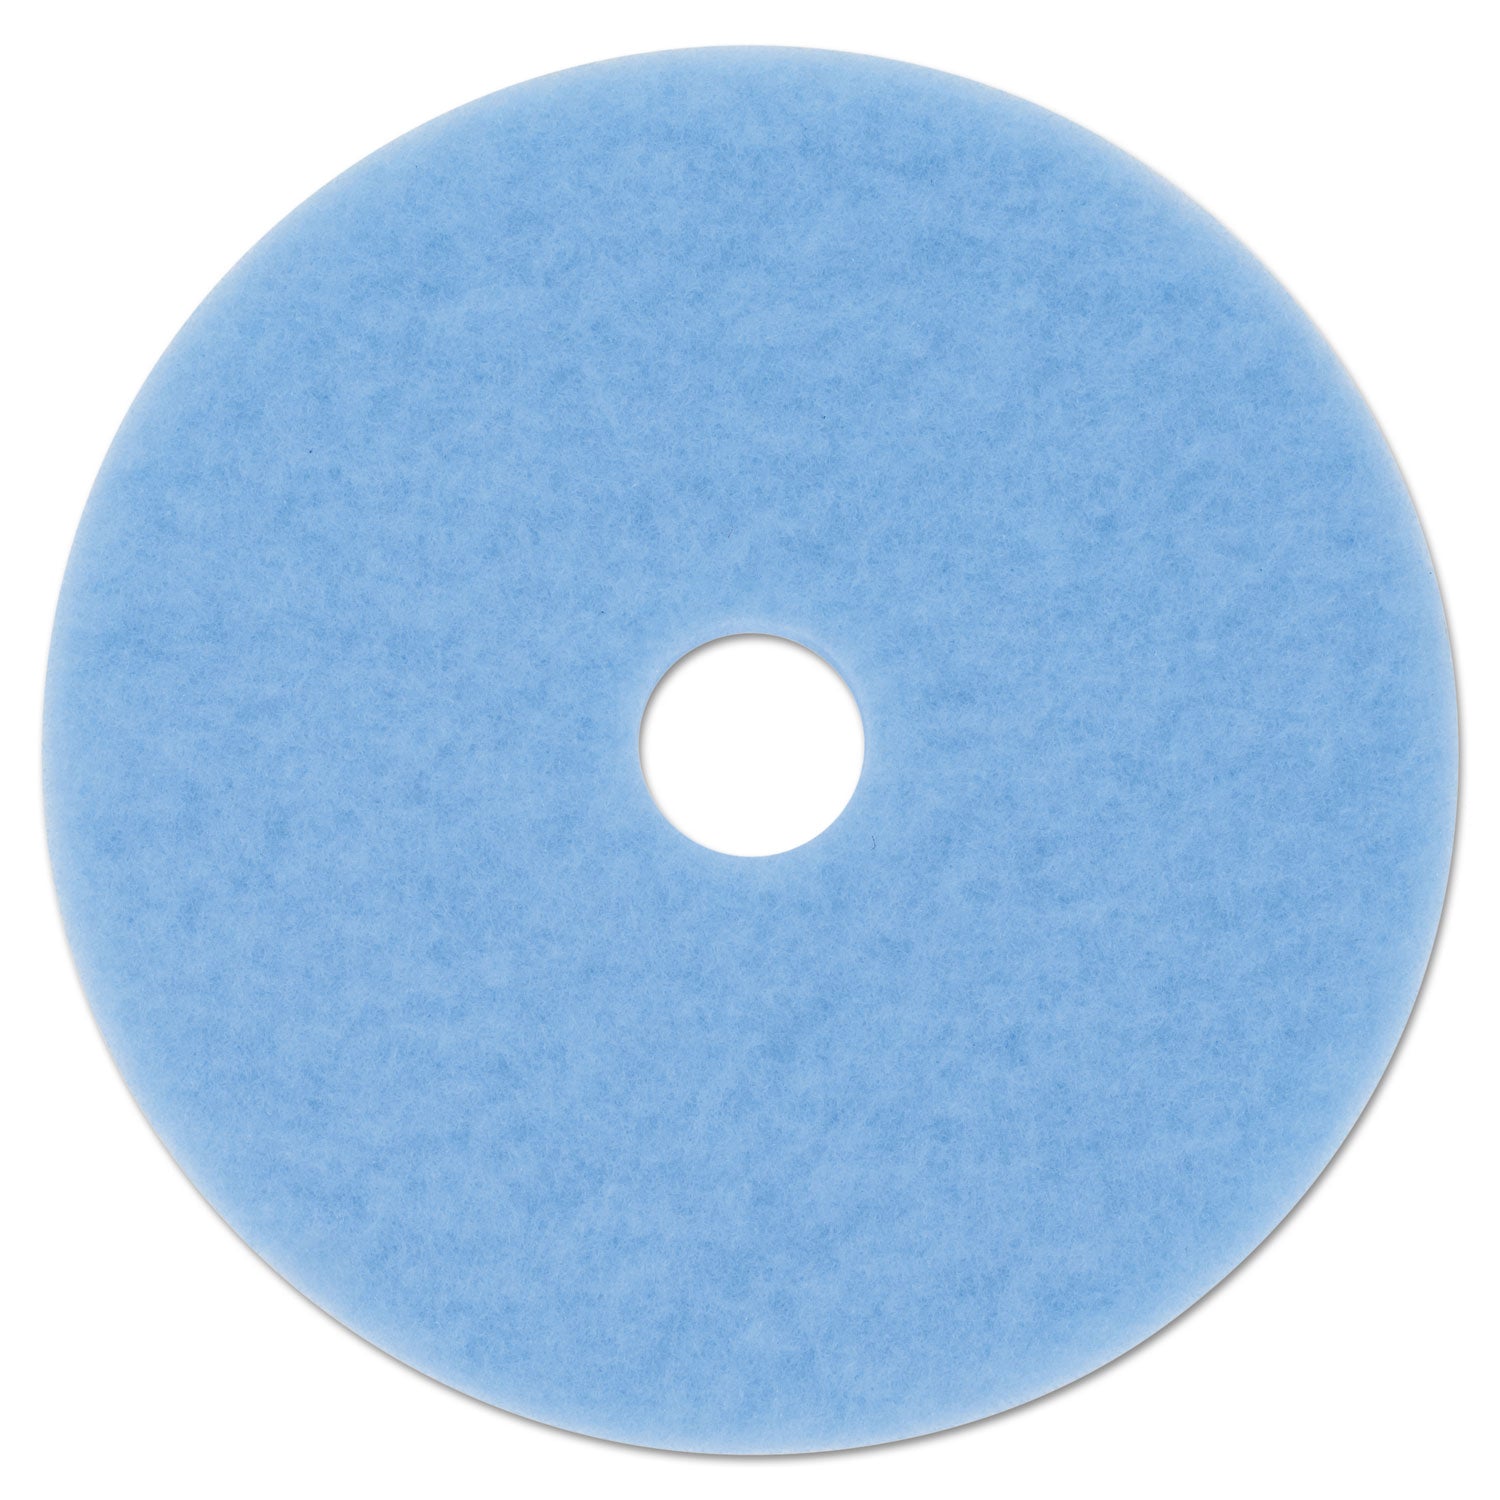 hi-performance-burnish-pad-3050-20-diameter-sky-blue-5-carton_mmm59825 - 1